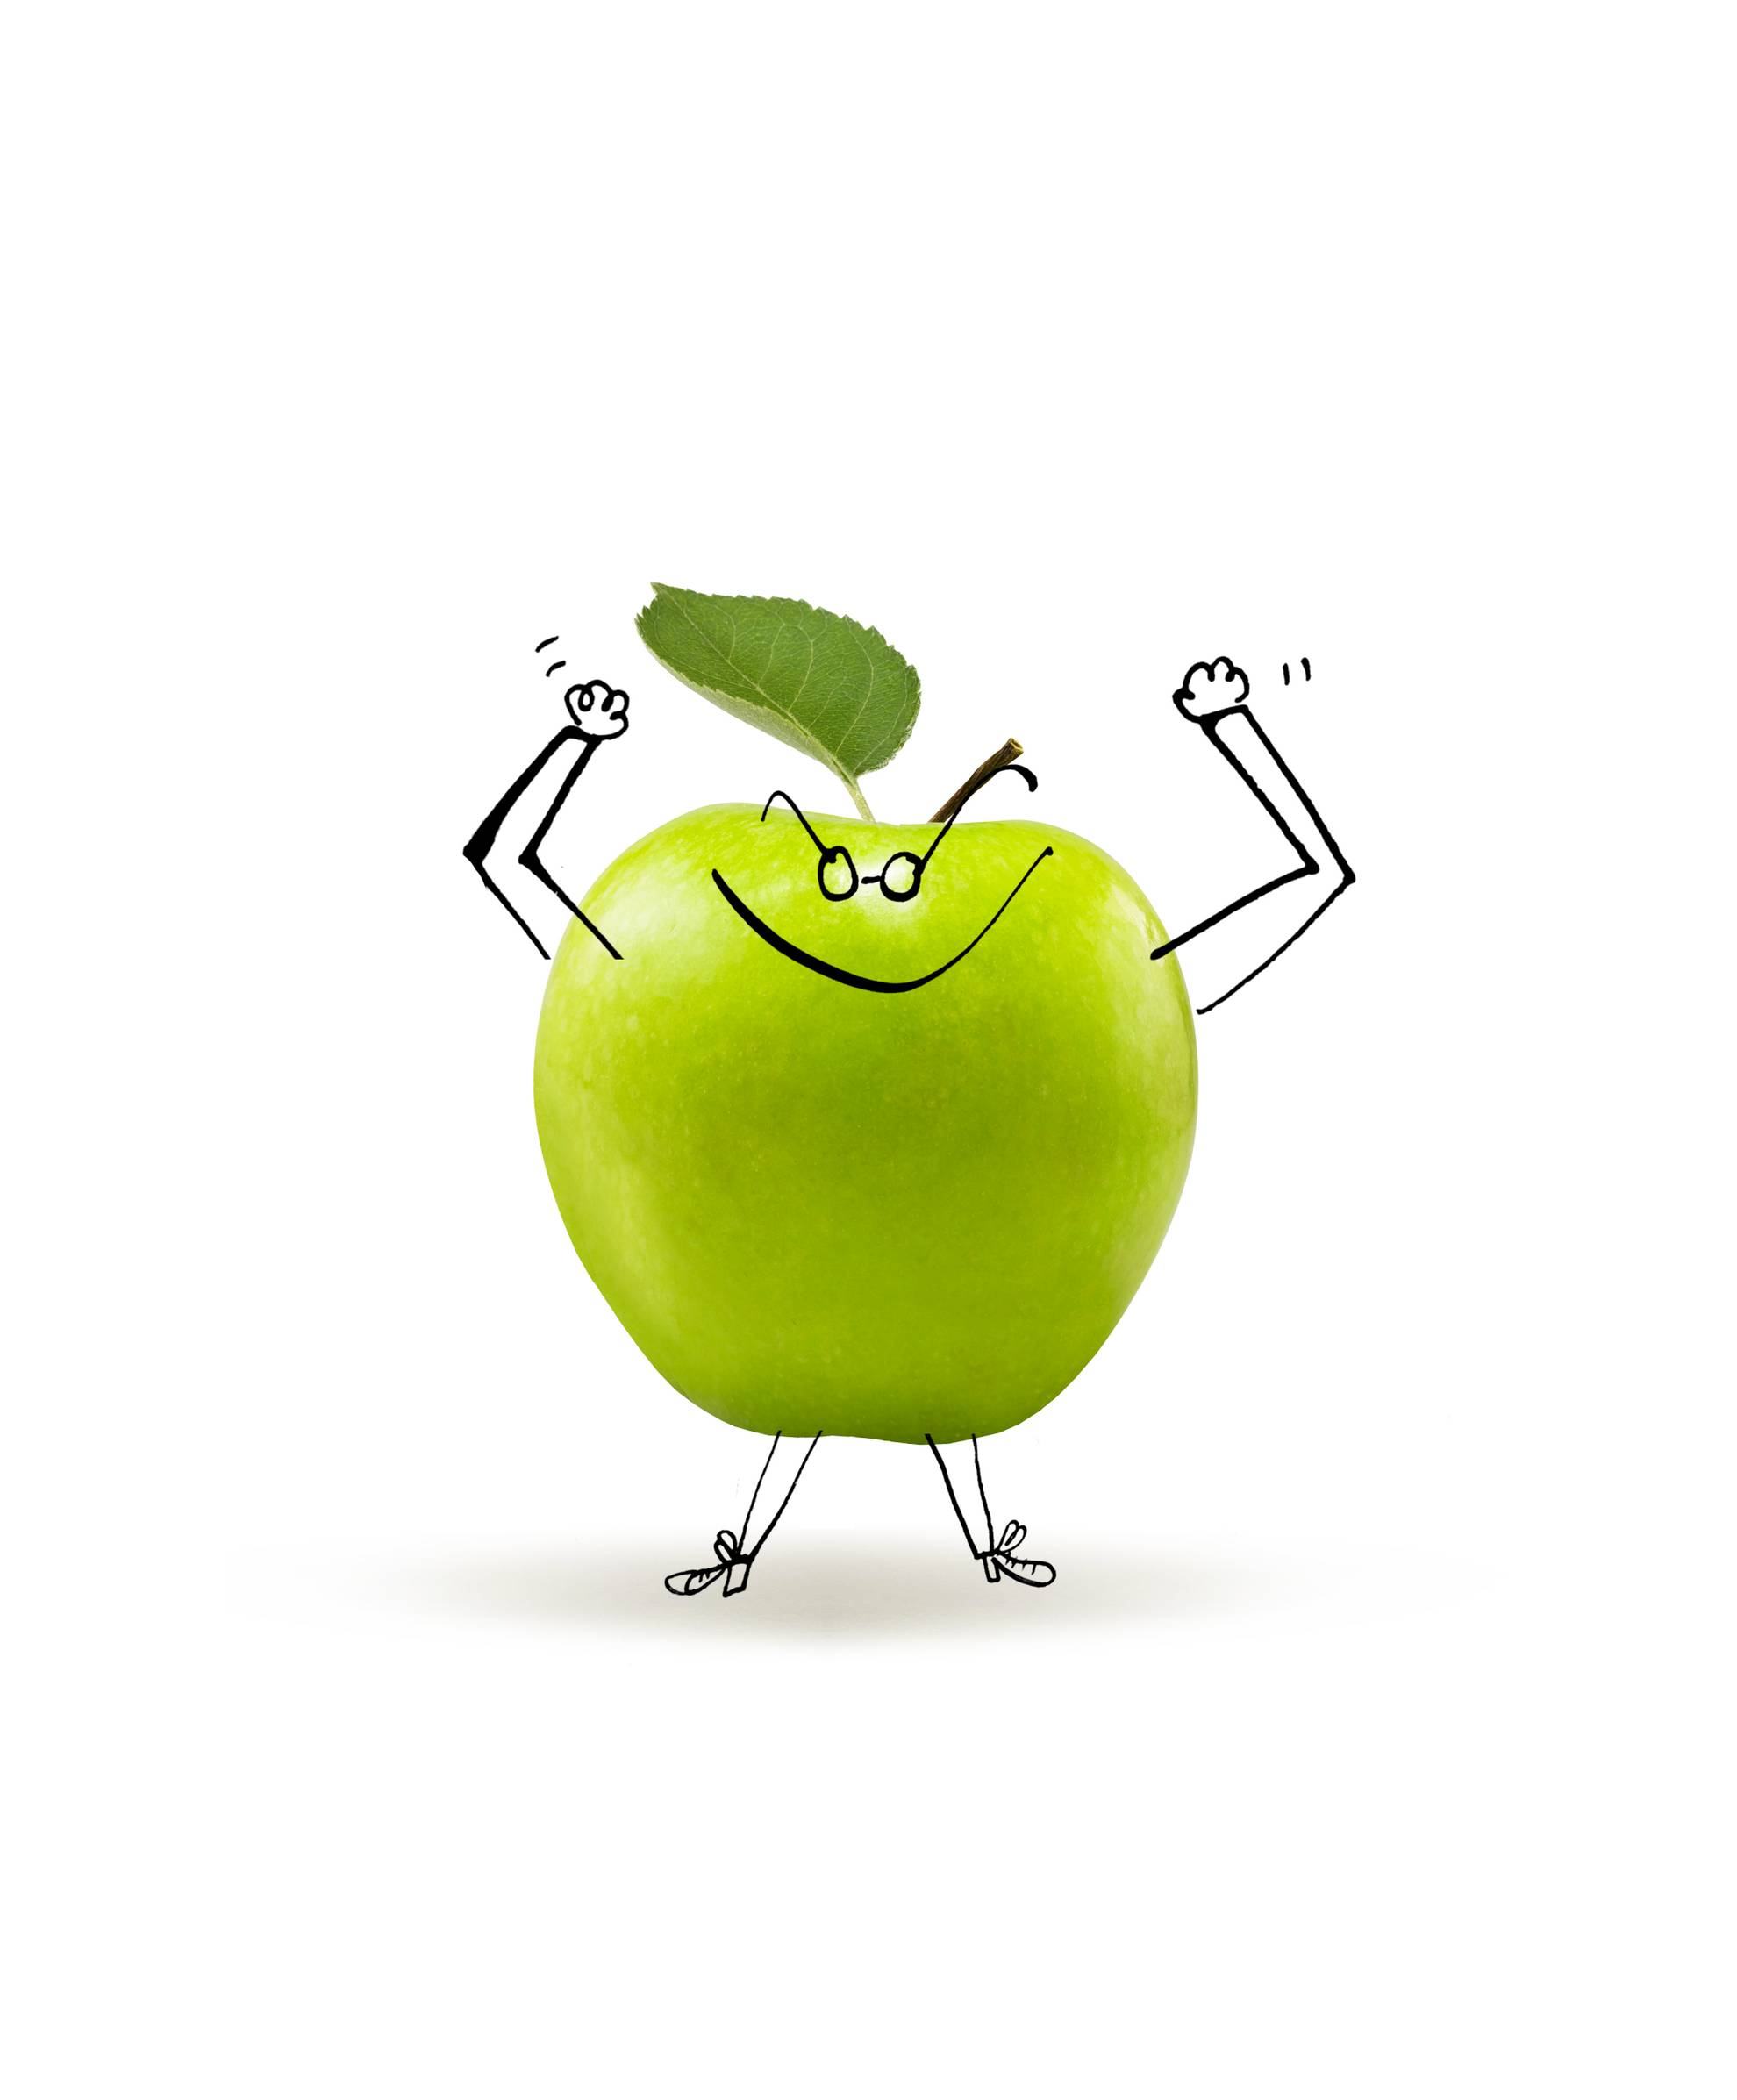 An illustration of an apple